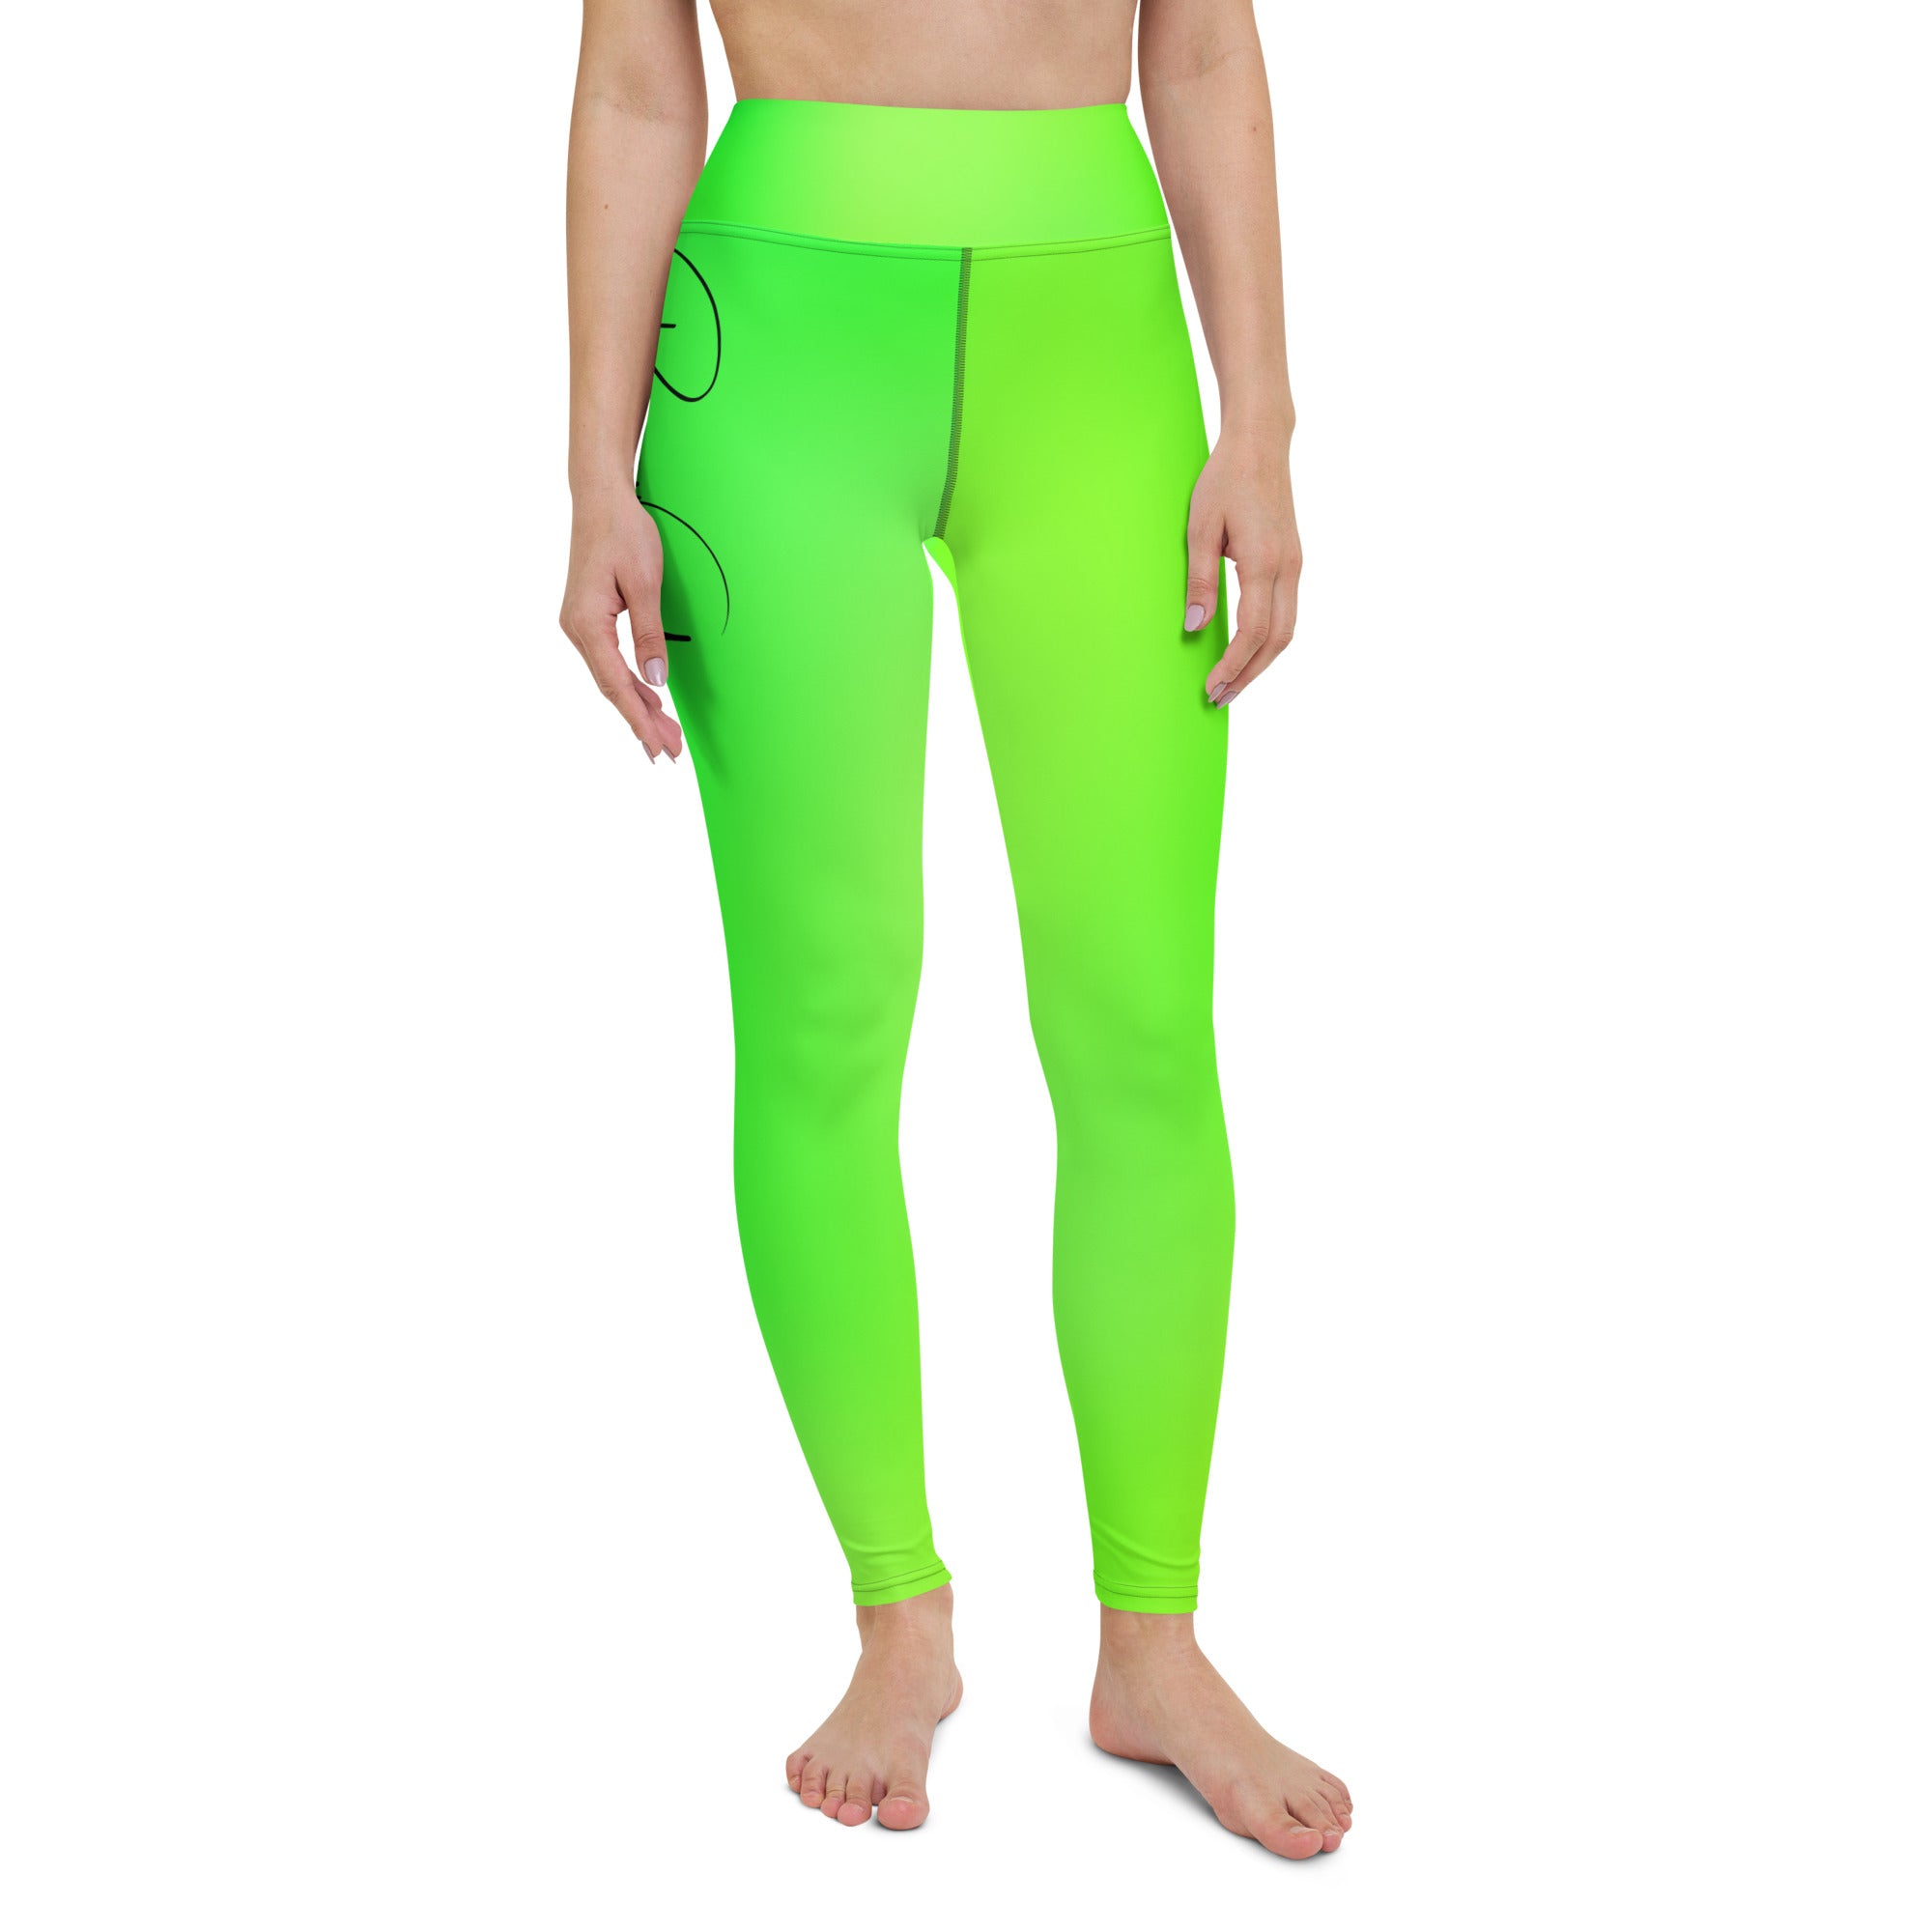 Women's Runway Girlz Yoga Leggings (Lime Green/Black) – The Runway